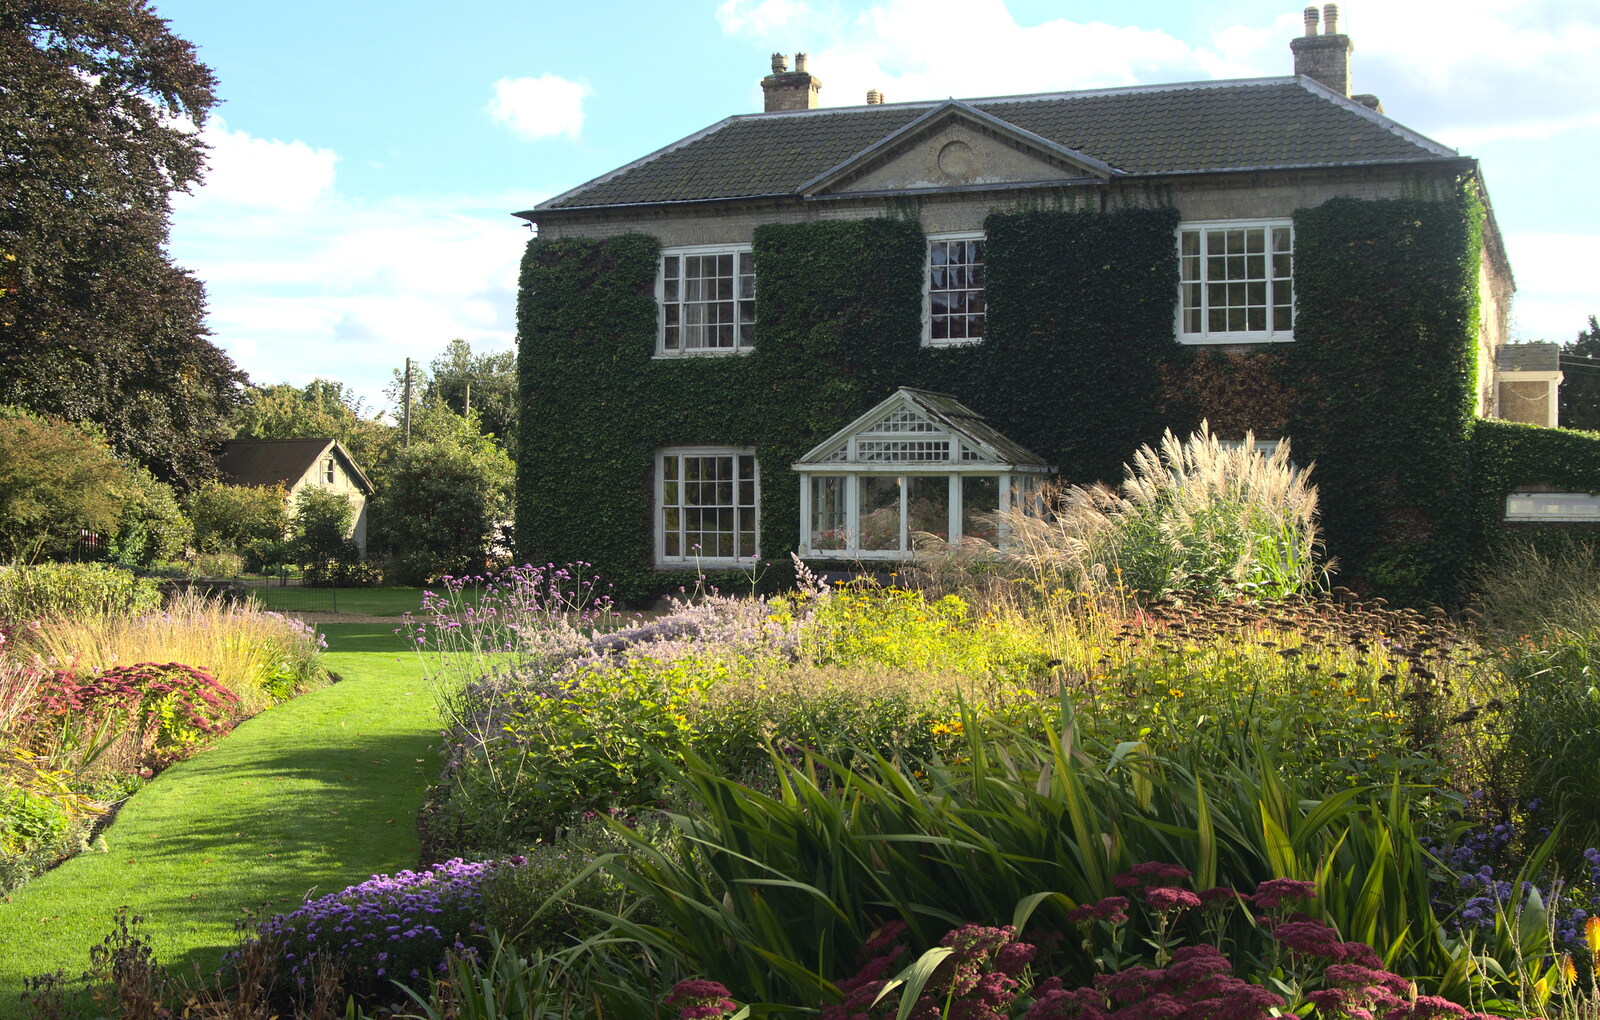 The house from Alan Bloom's Gardens, Bressingham, Norfolk - 6th October 2012